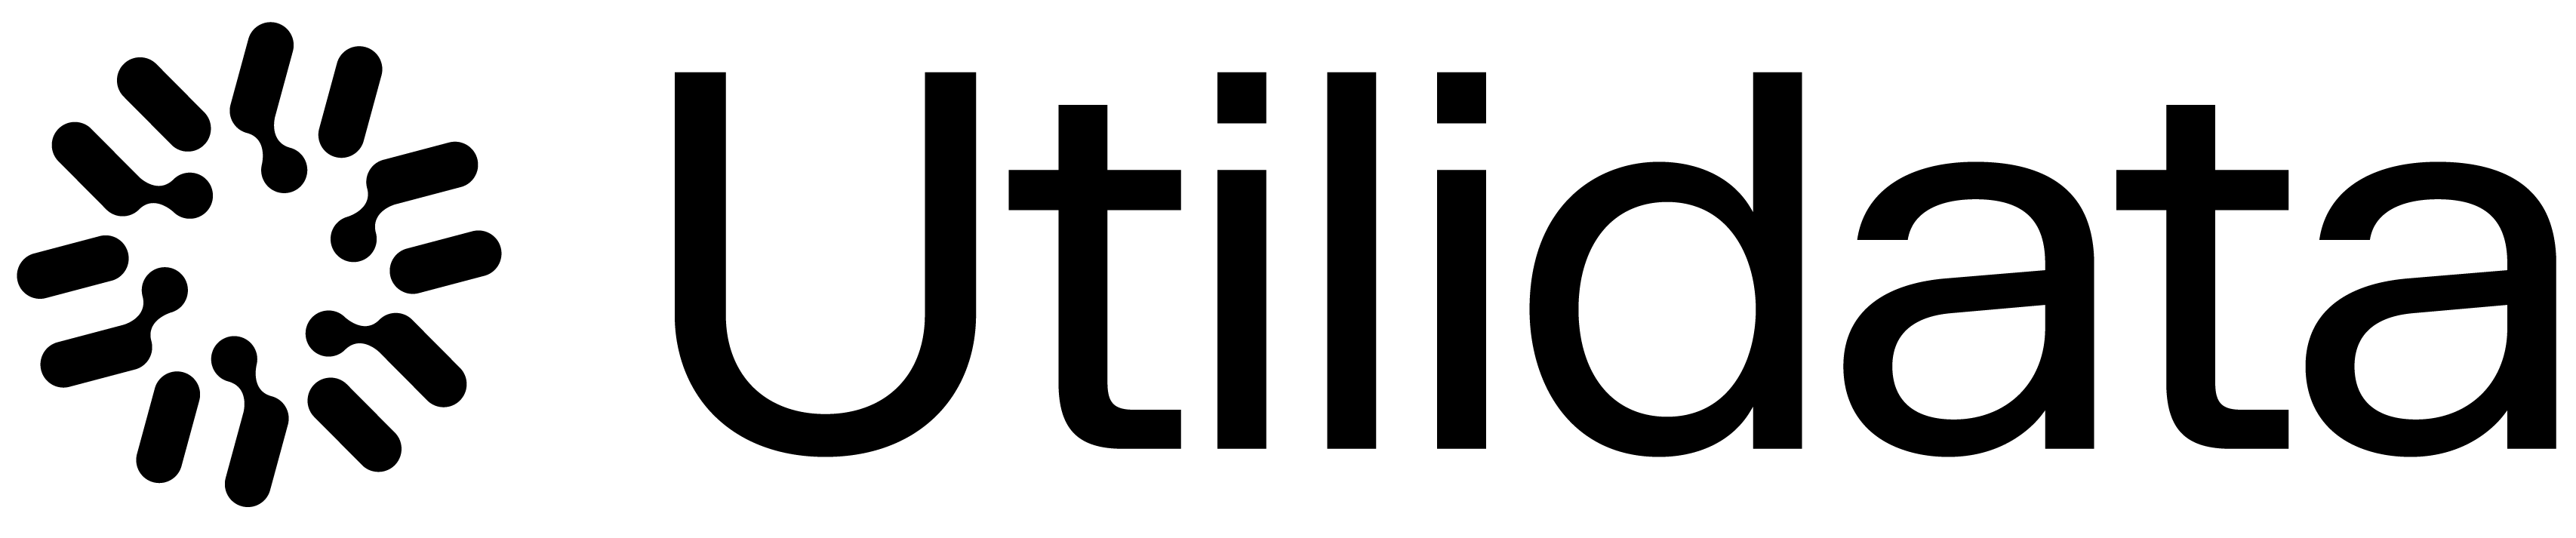 Utilidata Logo Lockup Black (1) copy